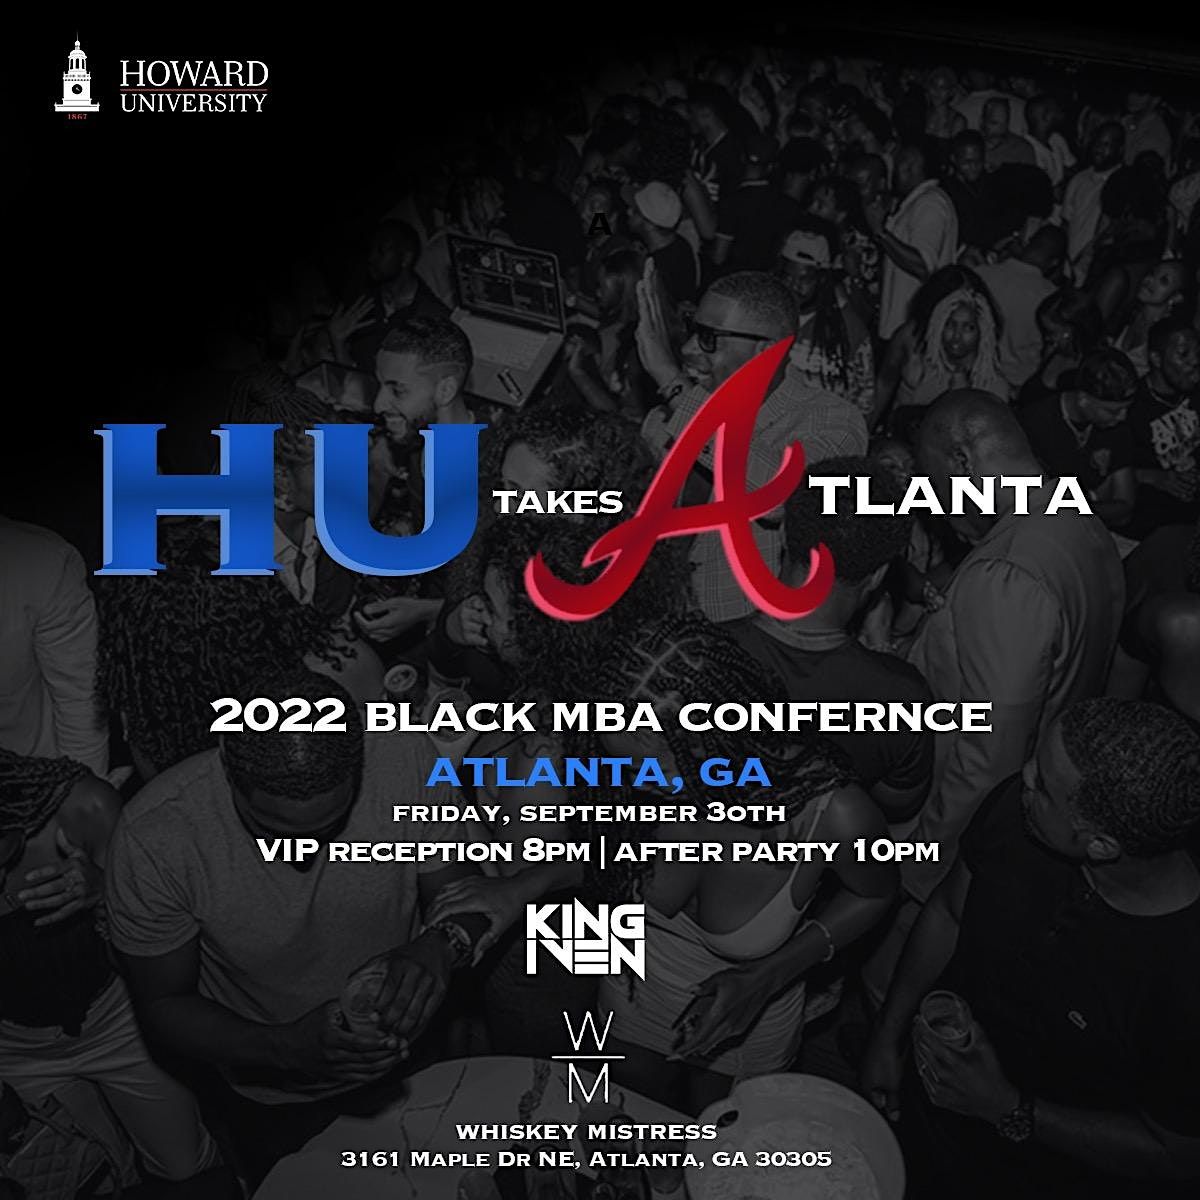 HU Takes Atlanta: Howard University's Black MBA Classic